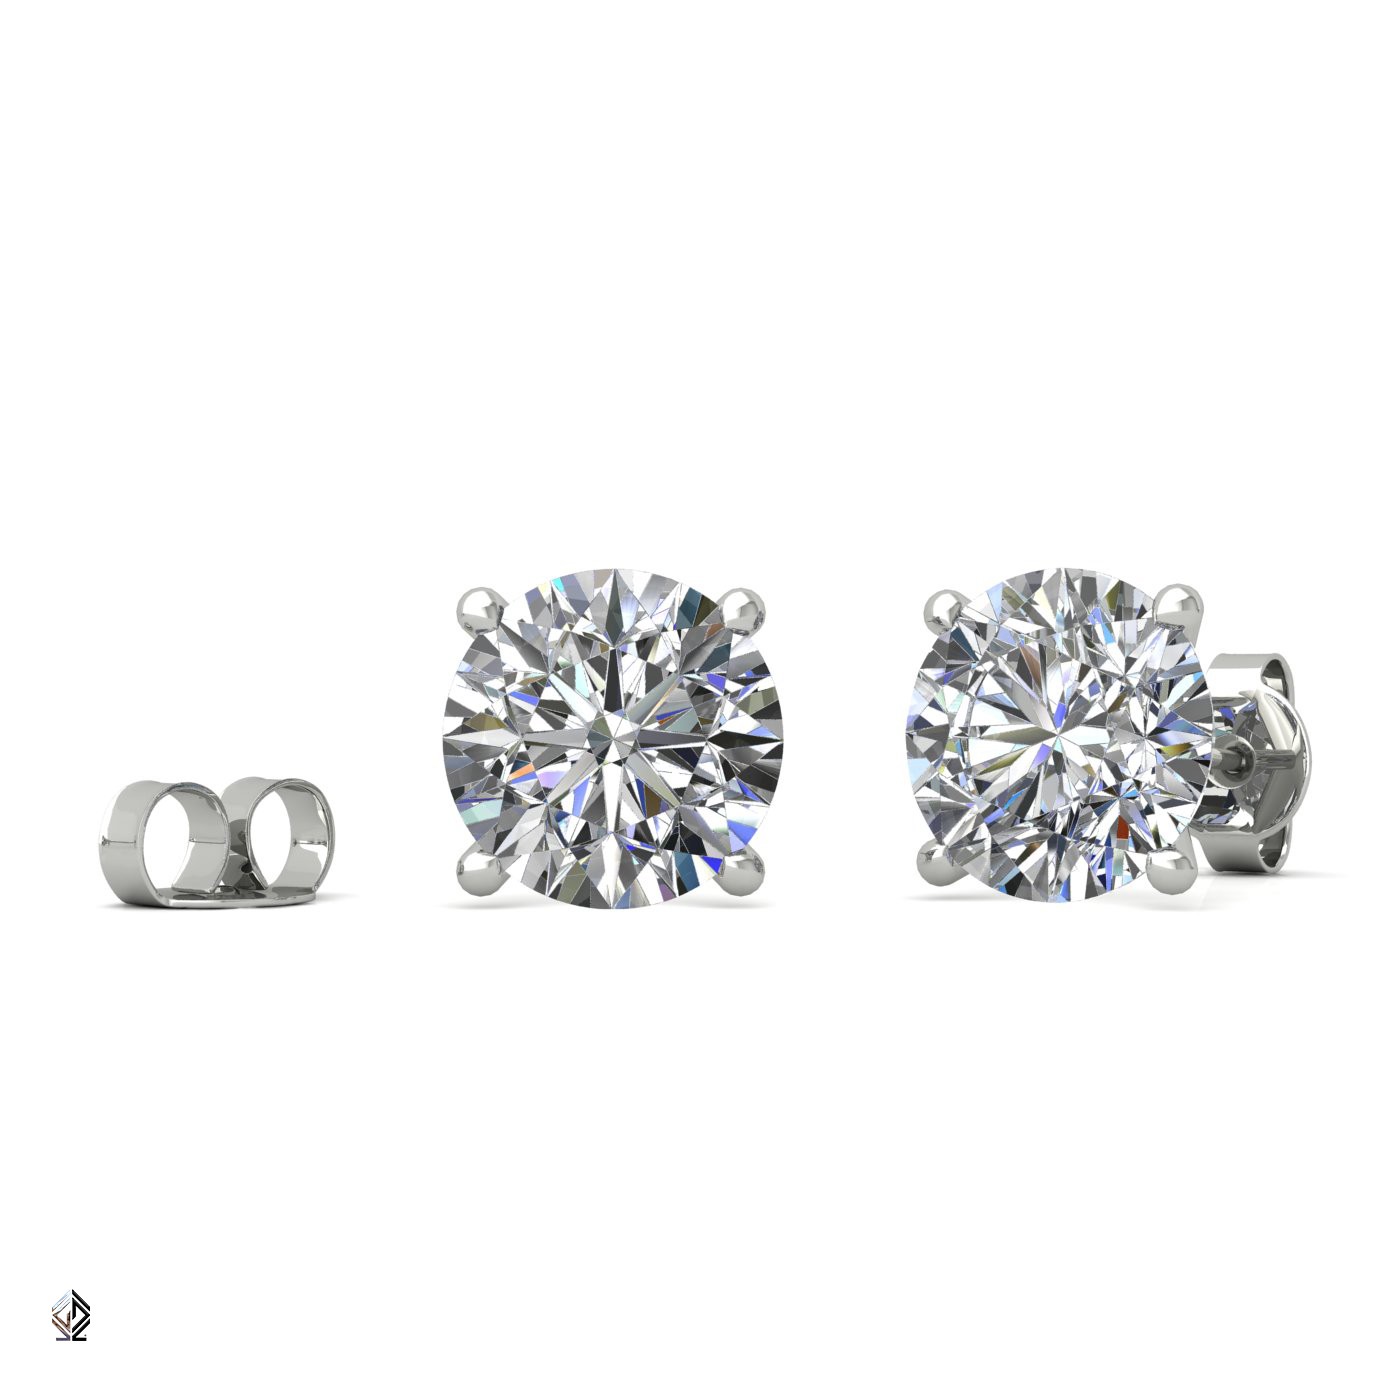 18k white gold 1.5 ct each (3,0 tcw) 4 prongs round cut classic diamond earring studs